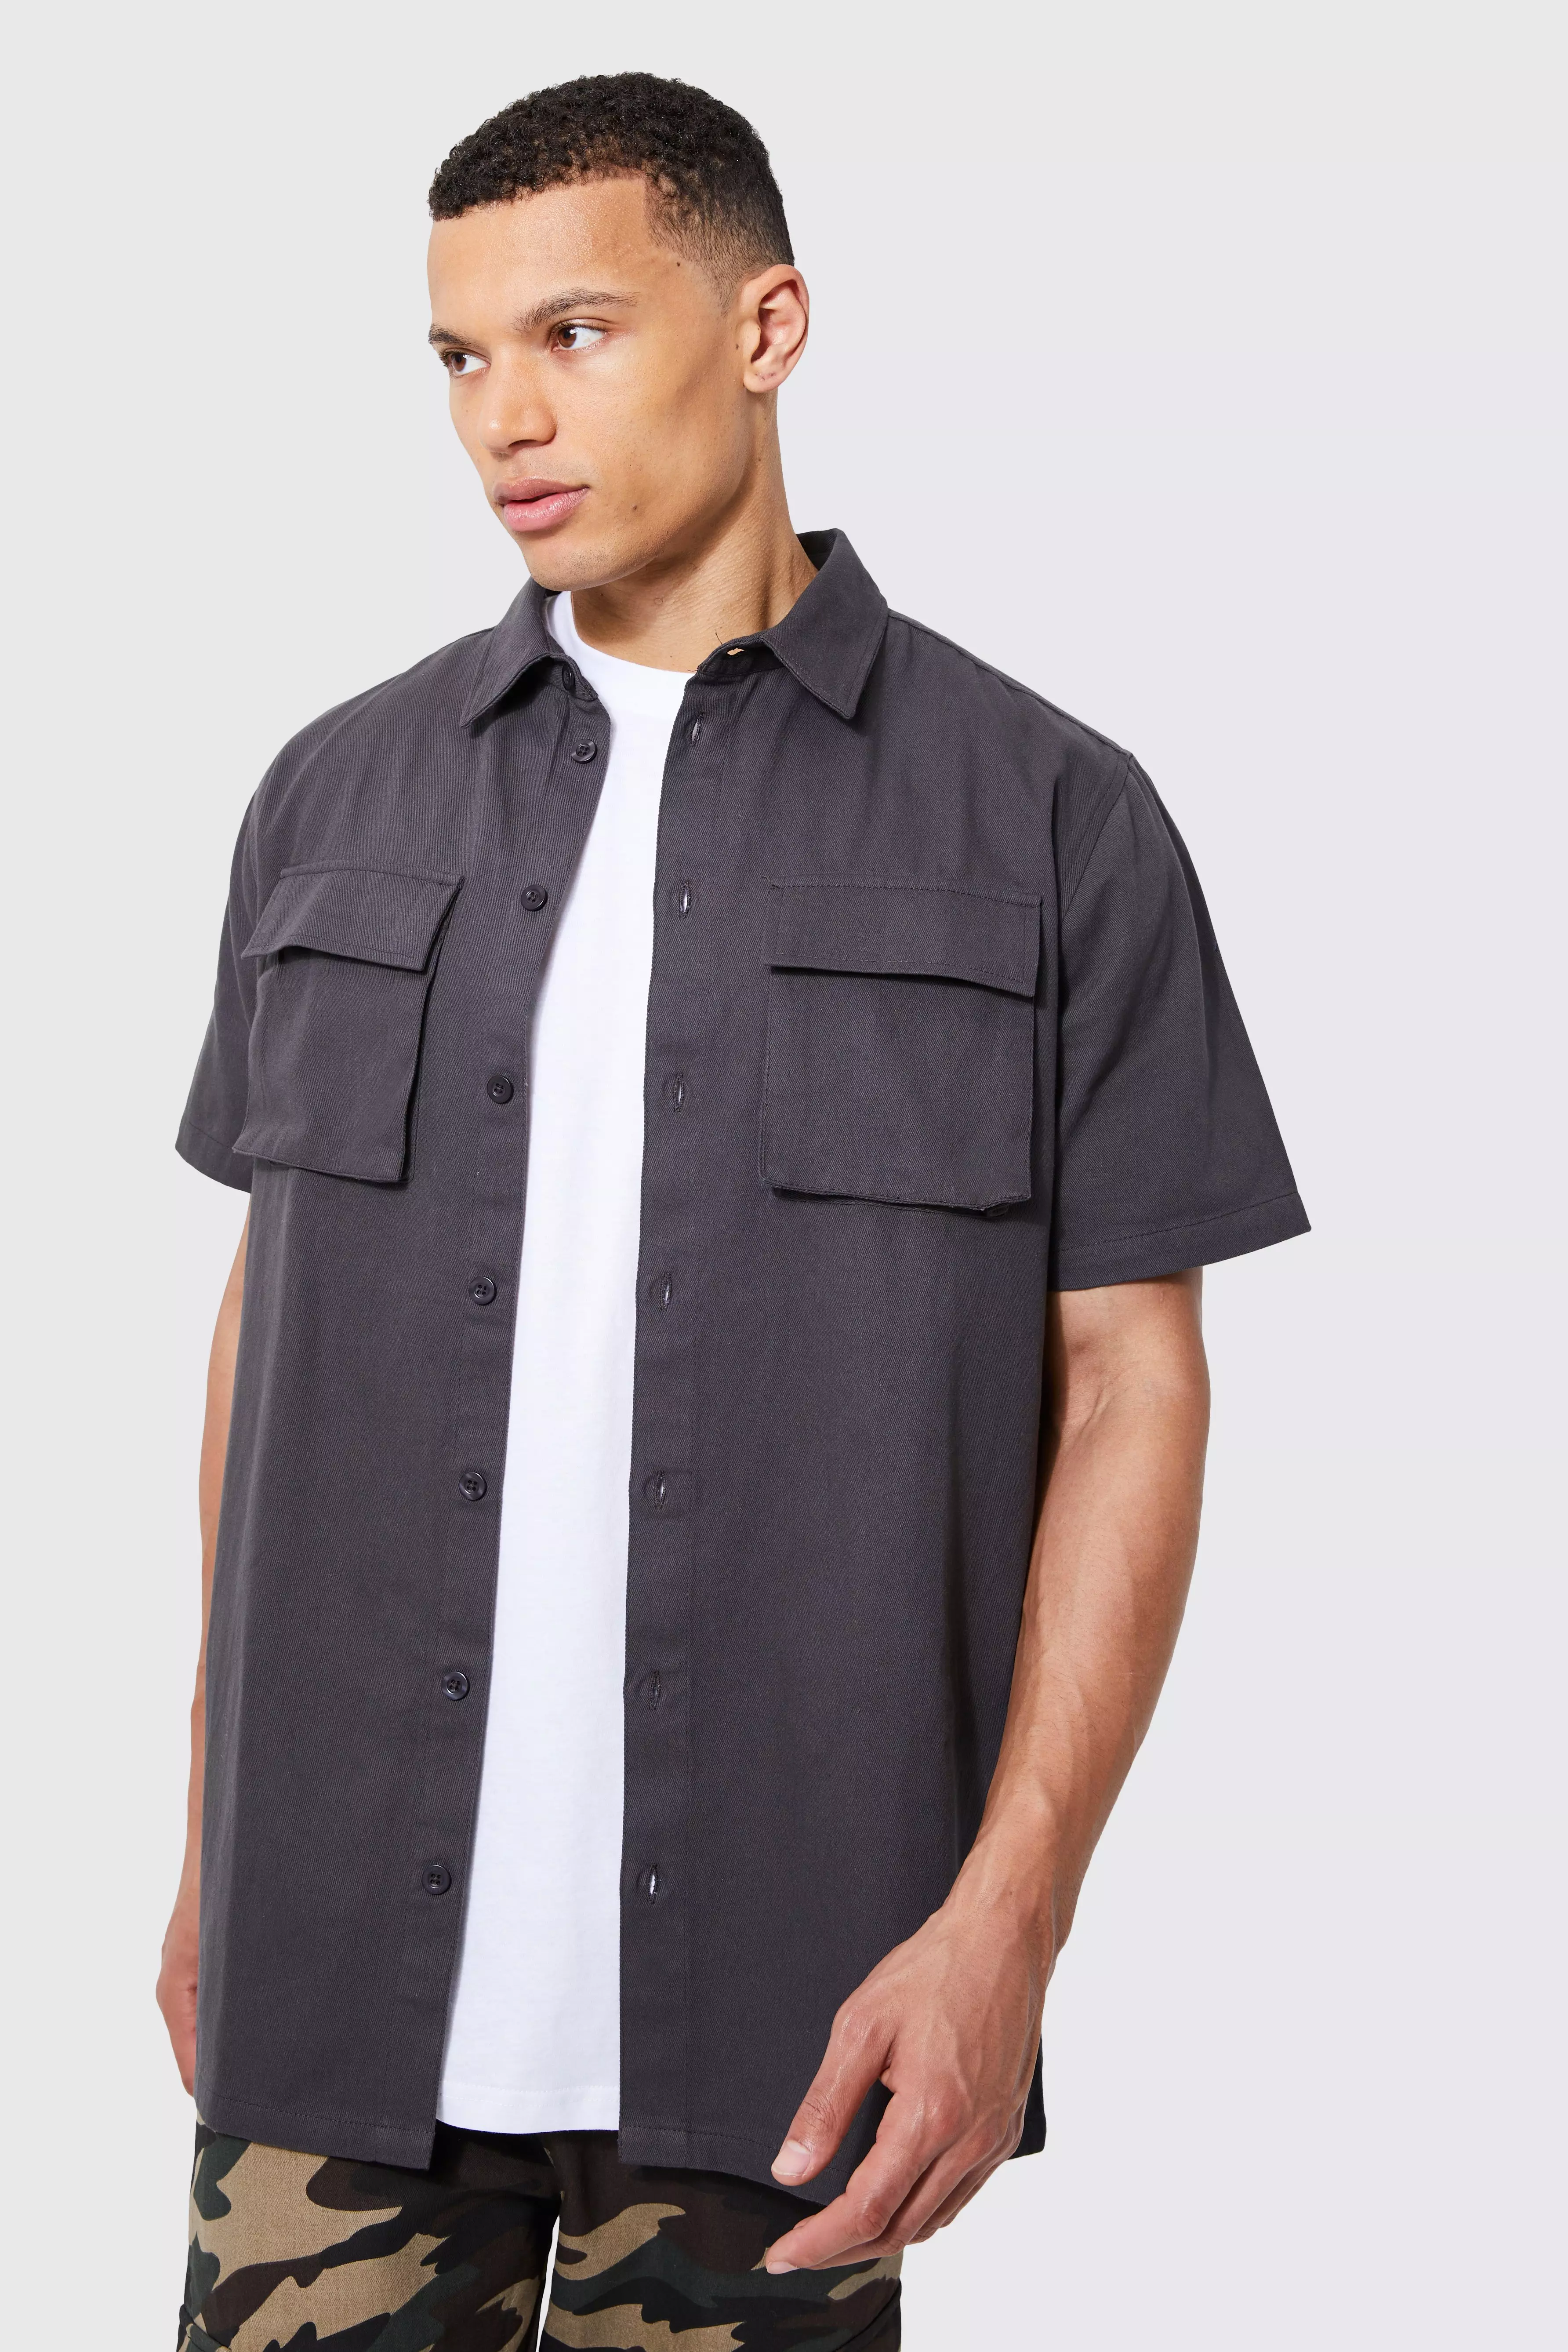 Charcoal Grey Tall Short Sleeve Shacket Utility Shirt